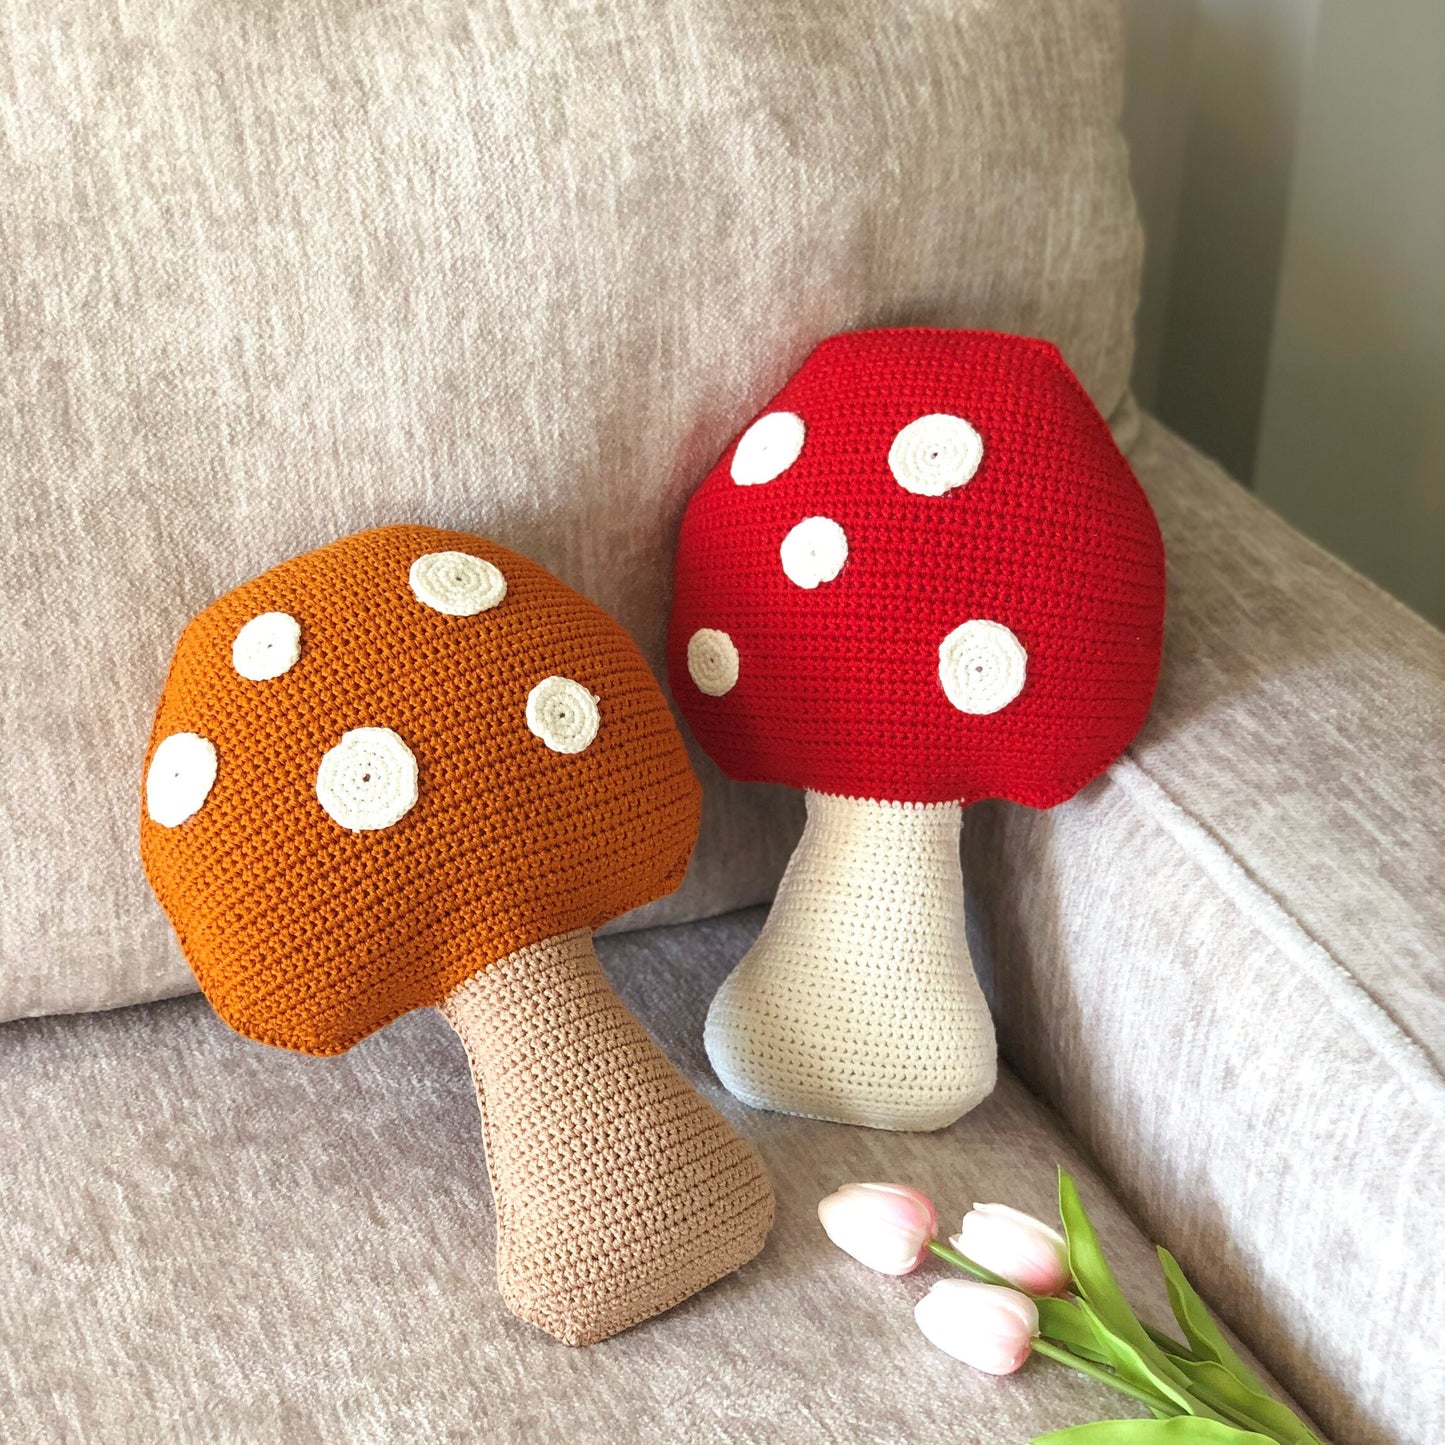 Handmade cotton yarn mushroom pillow crochet, home decor, amigurumi, decorative mushroom throw pillow